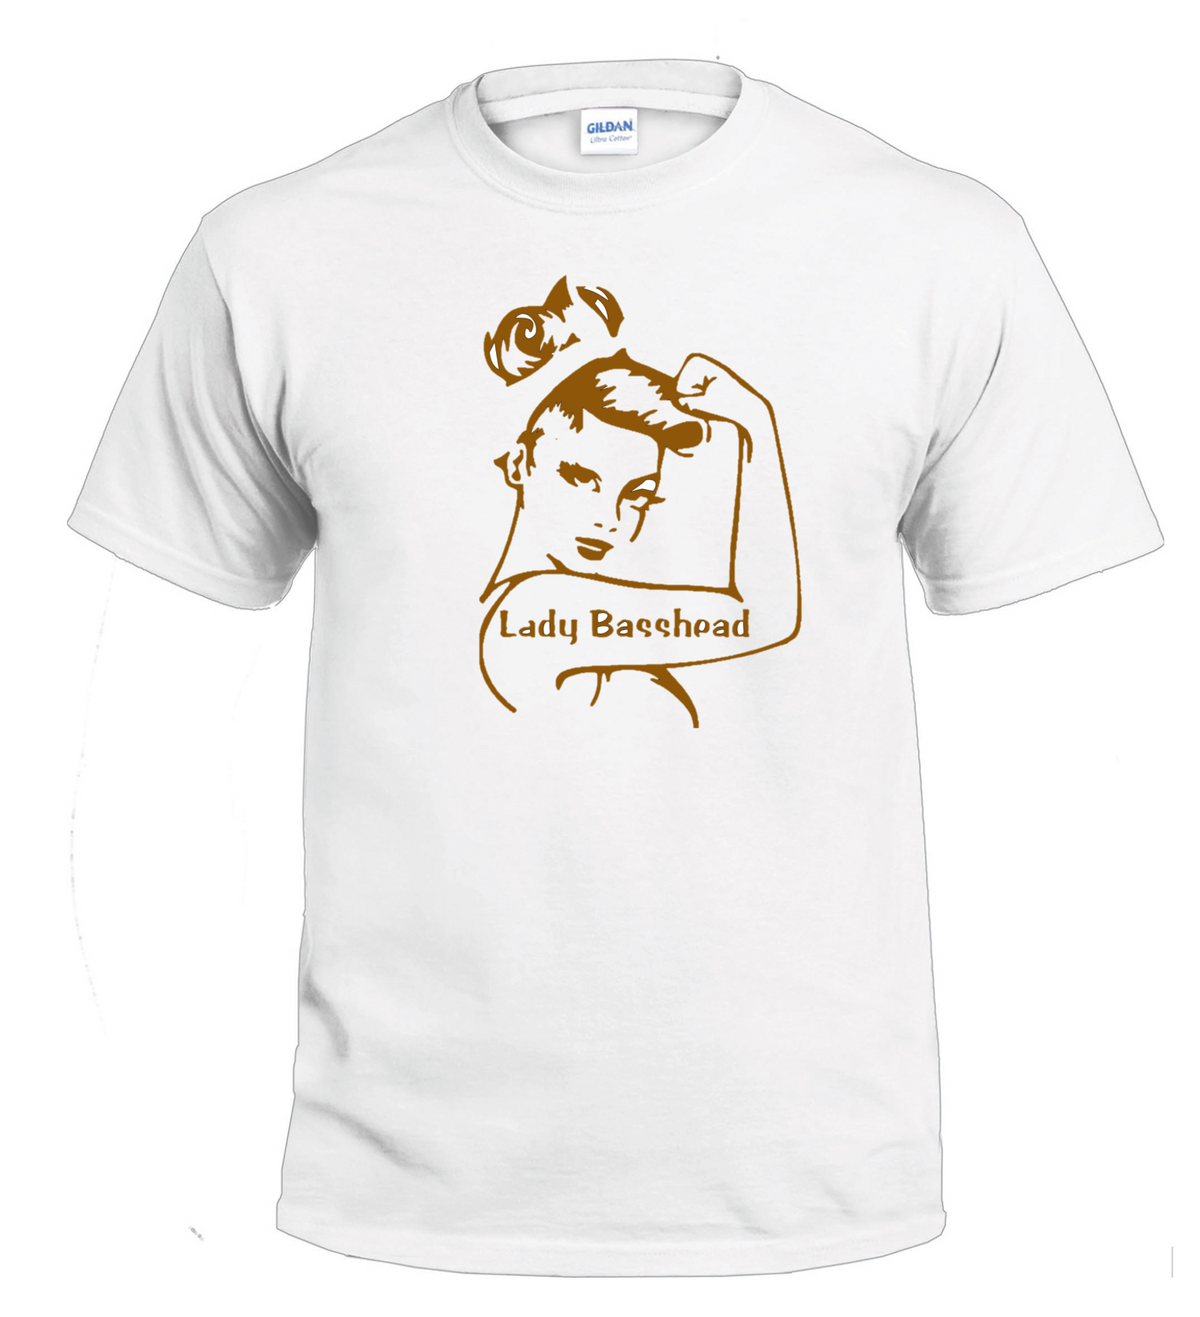 Lady Basshead t-shirt